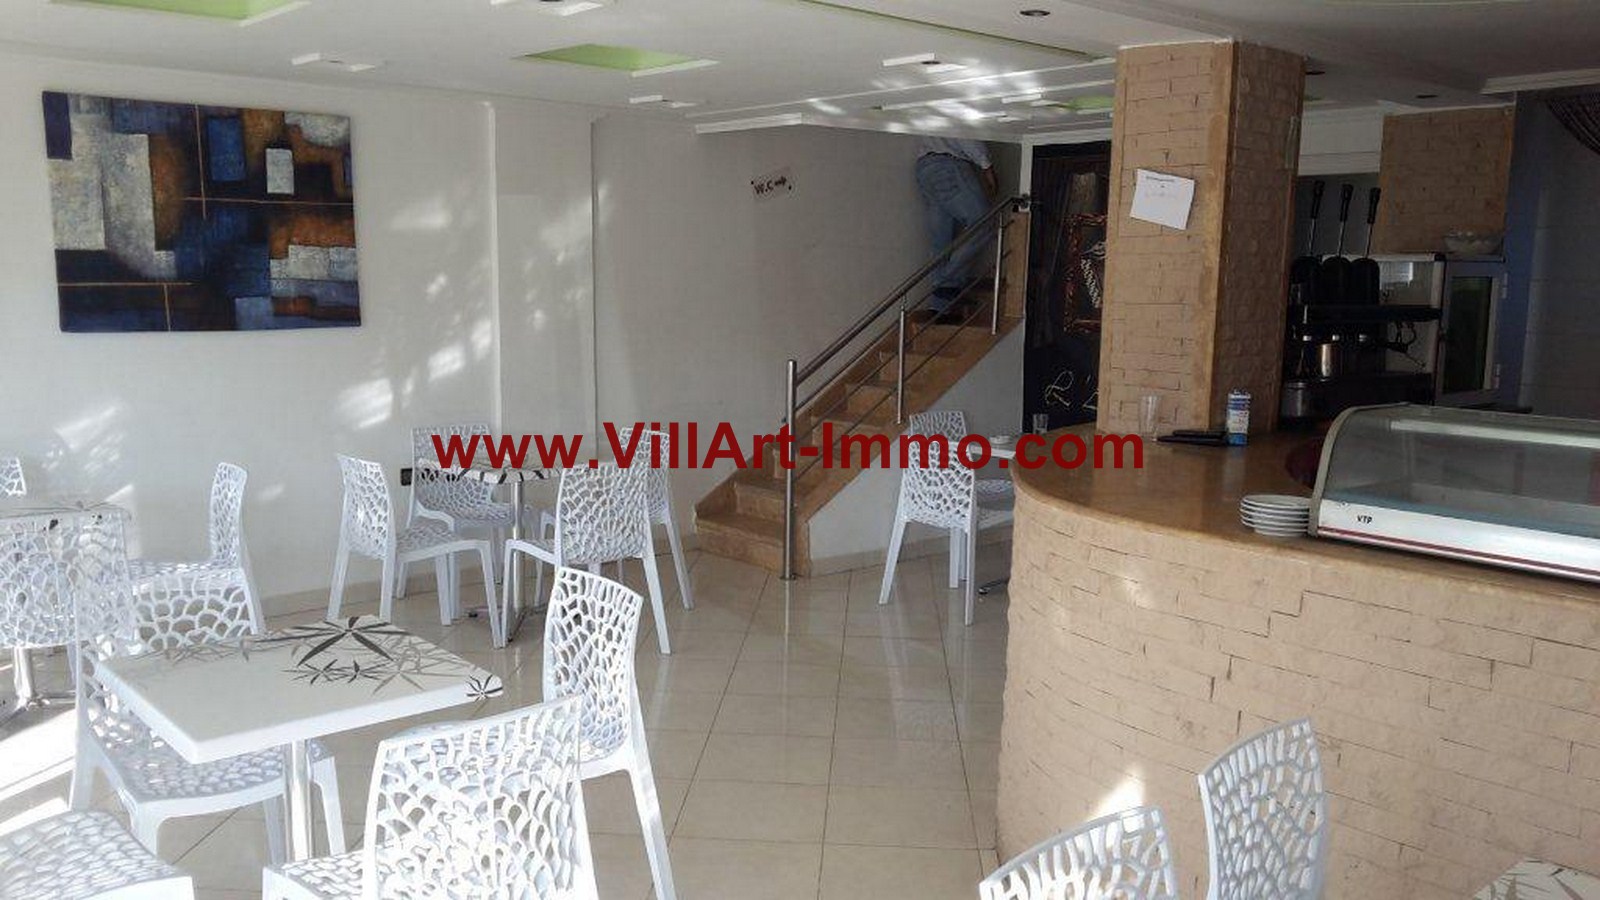 5-Vente-Fonds-de-Commerce-Tanger-salle-de-Restaurant 2-VLC286-Villart-immo